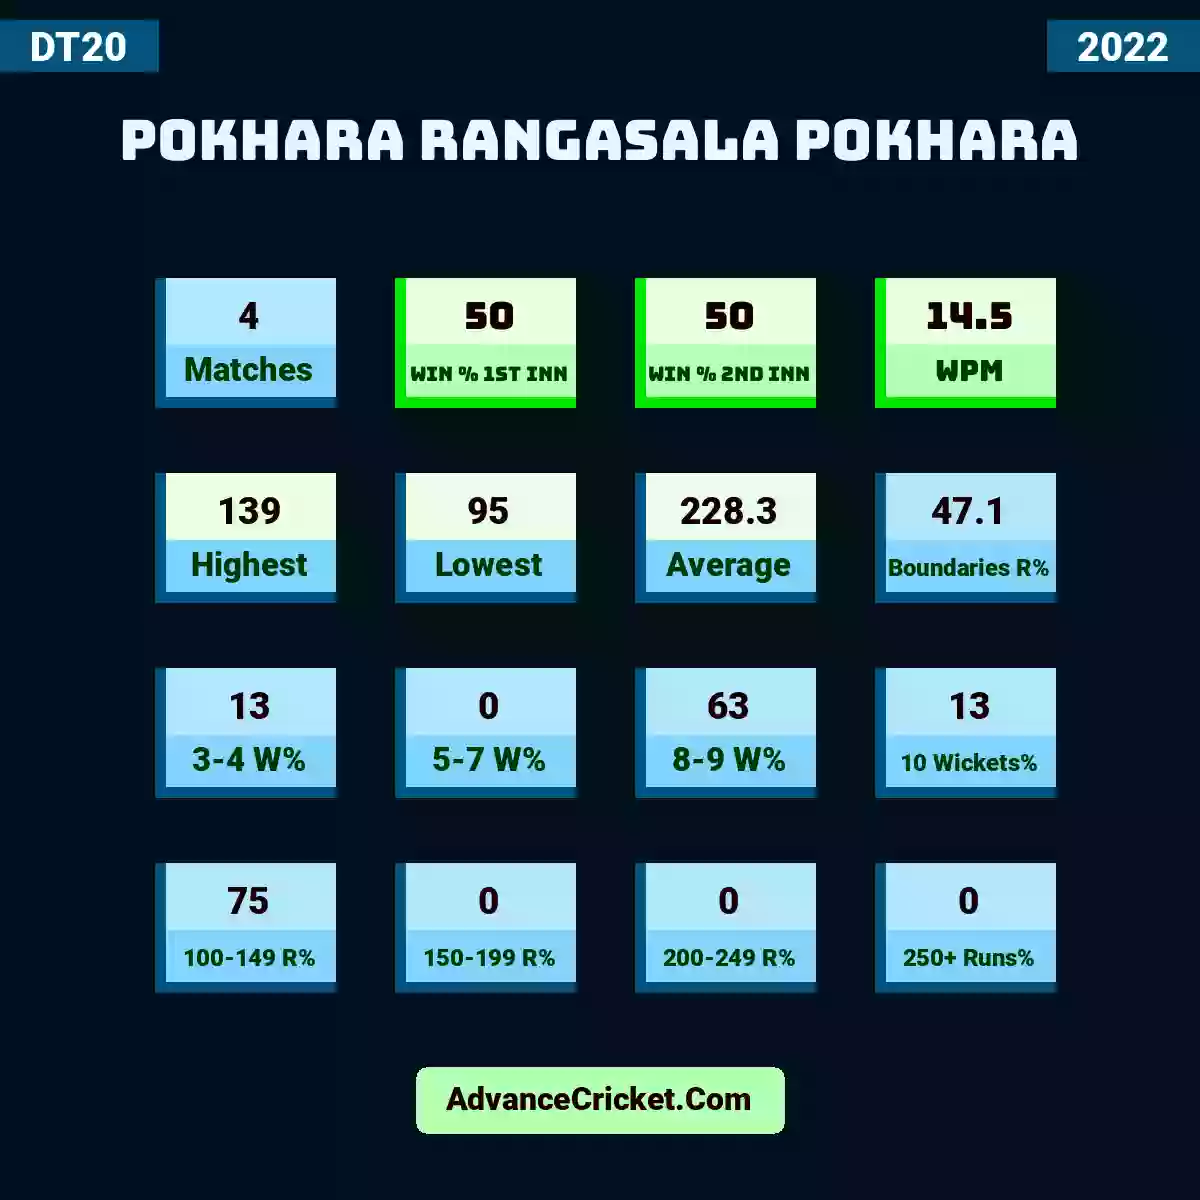 Image showing Pokhara Rangasala Pokhara with Matches: 4, Win % 1st Inn: 50, Win % 2nd Inn: 50, WPM: 14.5, Highest: 139, Lowest: 95, Average: 228.3, Boundaries R%: 47.1, 3-4 W%: 13, 5-7 W%: 0, 8-9 W%: 63, 10 Wickets%: 13, 100-149 R%: 75, 150-199 R%: 0, 200-249 R%: 0, 250+ Runs%: 0.